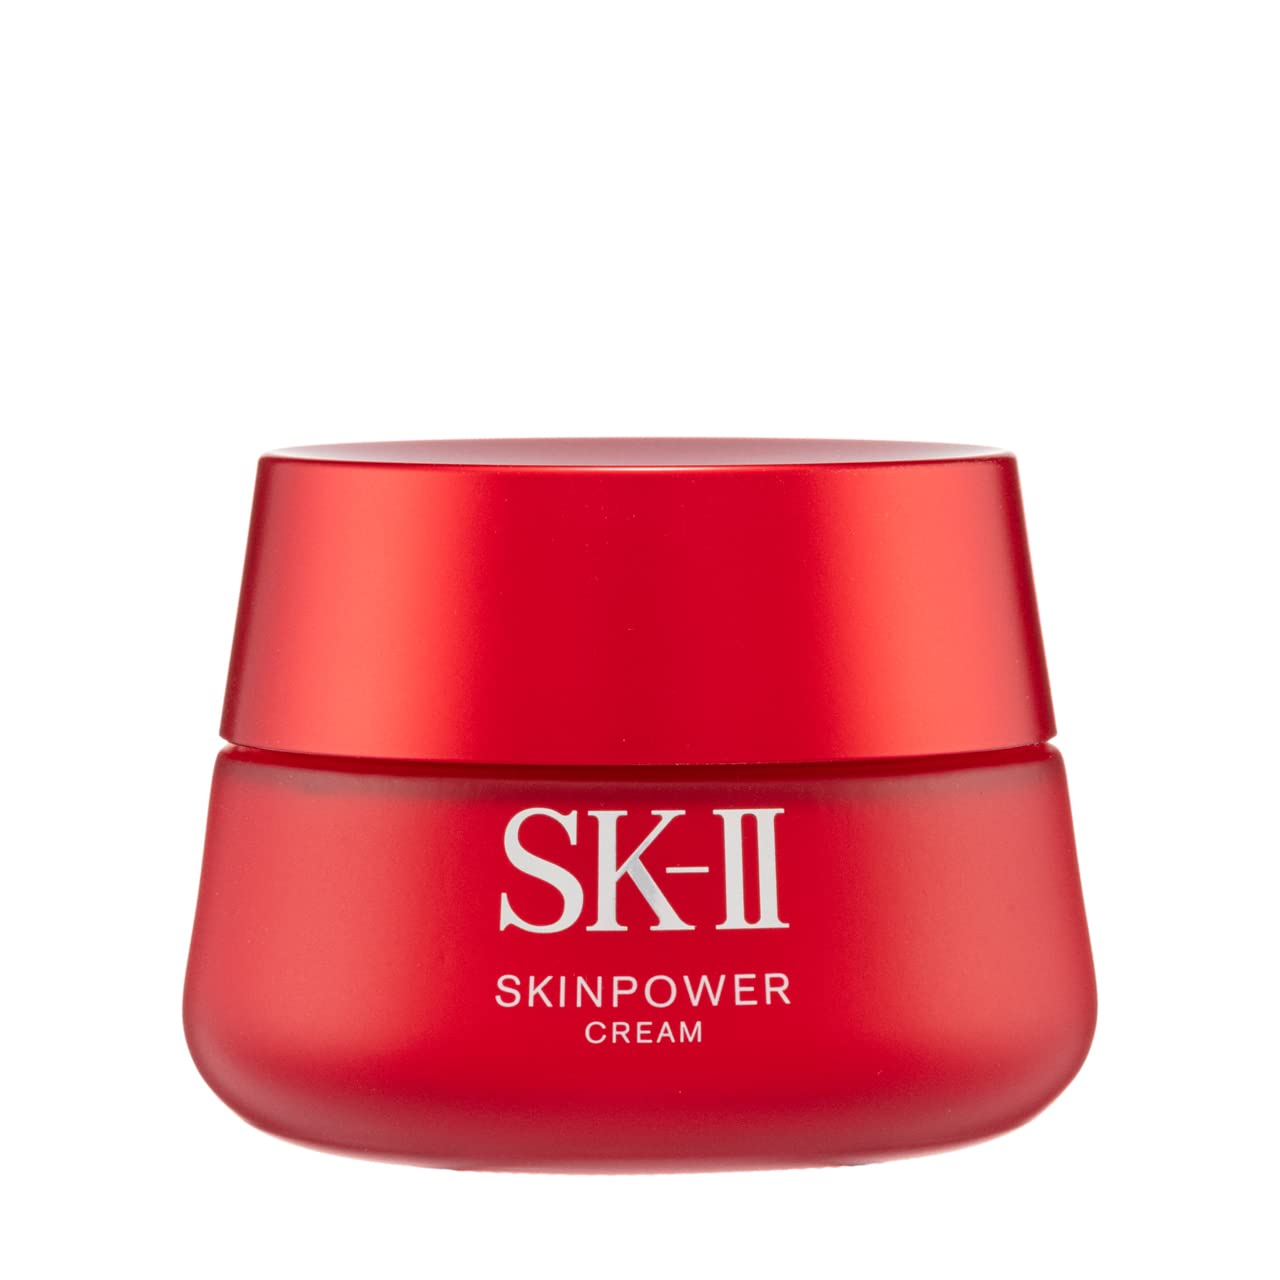 SK-II New SKINPOWER Cream - 2.8 Oz-1